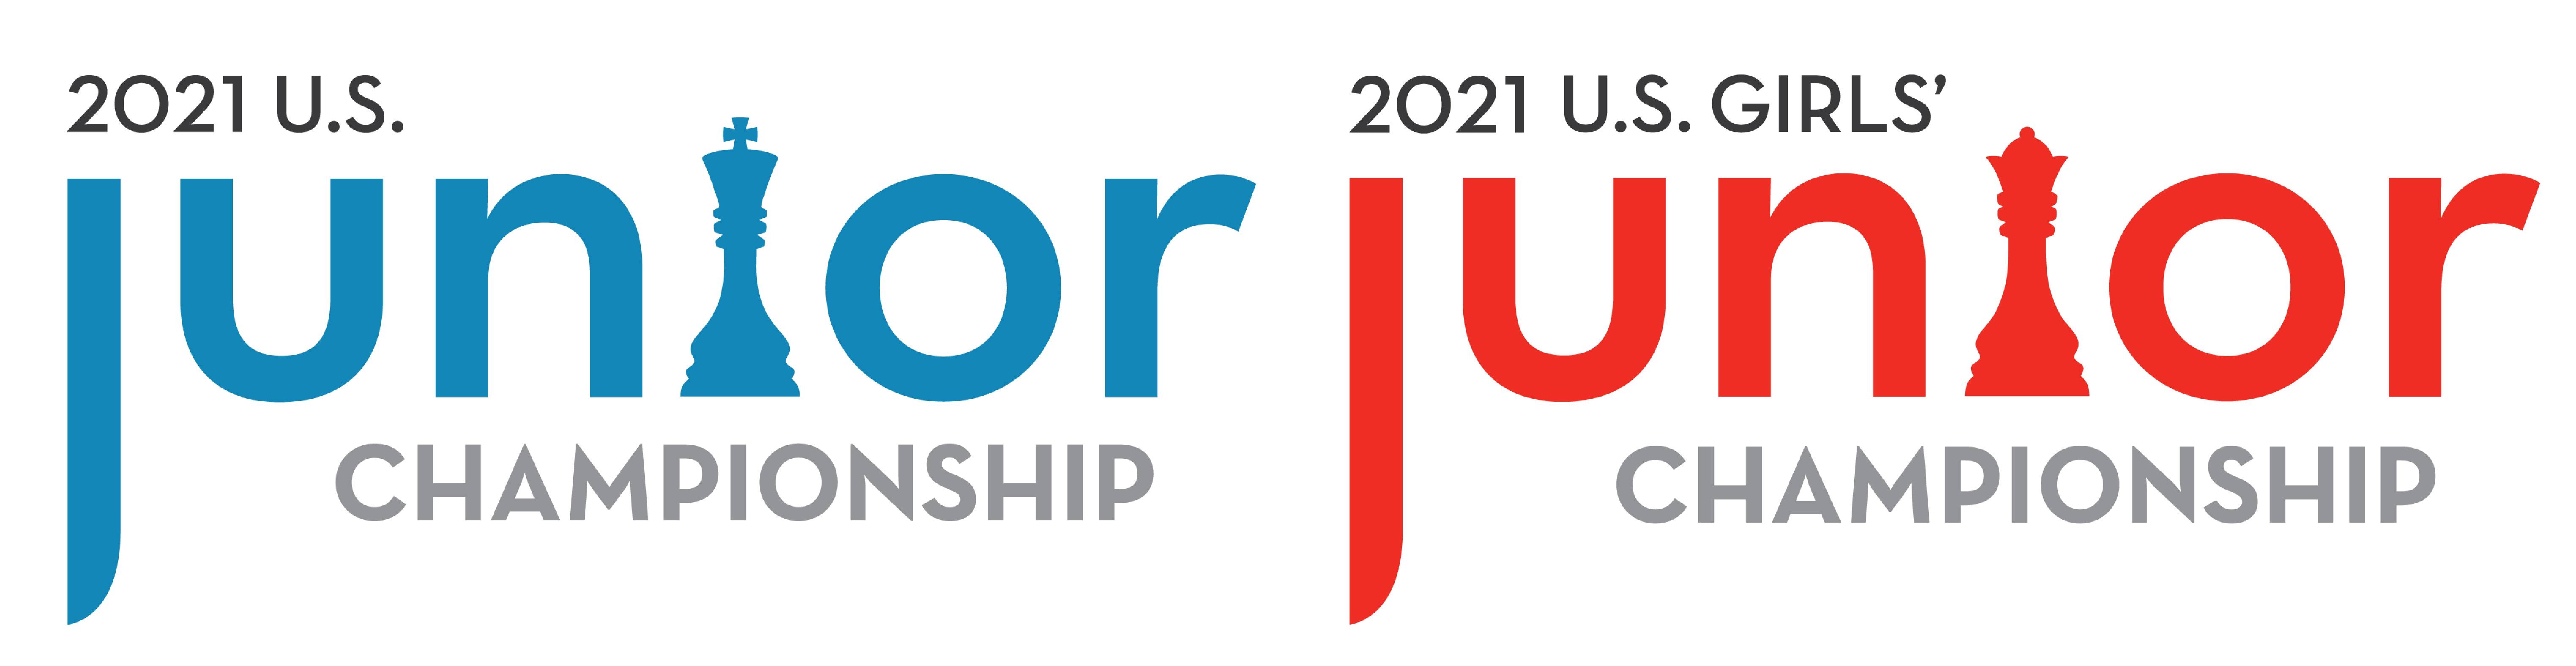 2021 US Junior Congress Online - National Championship